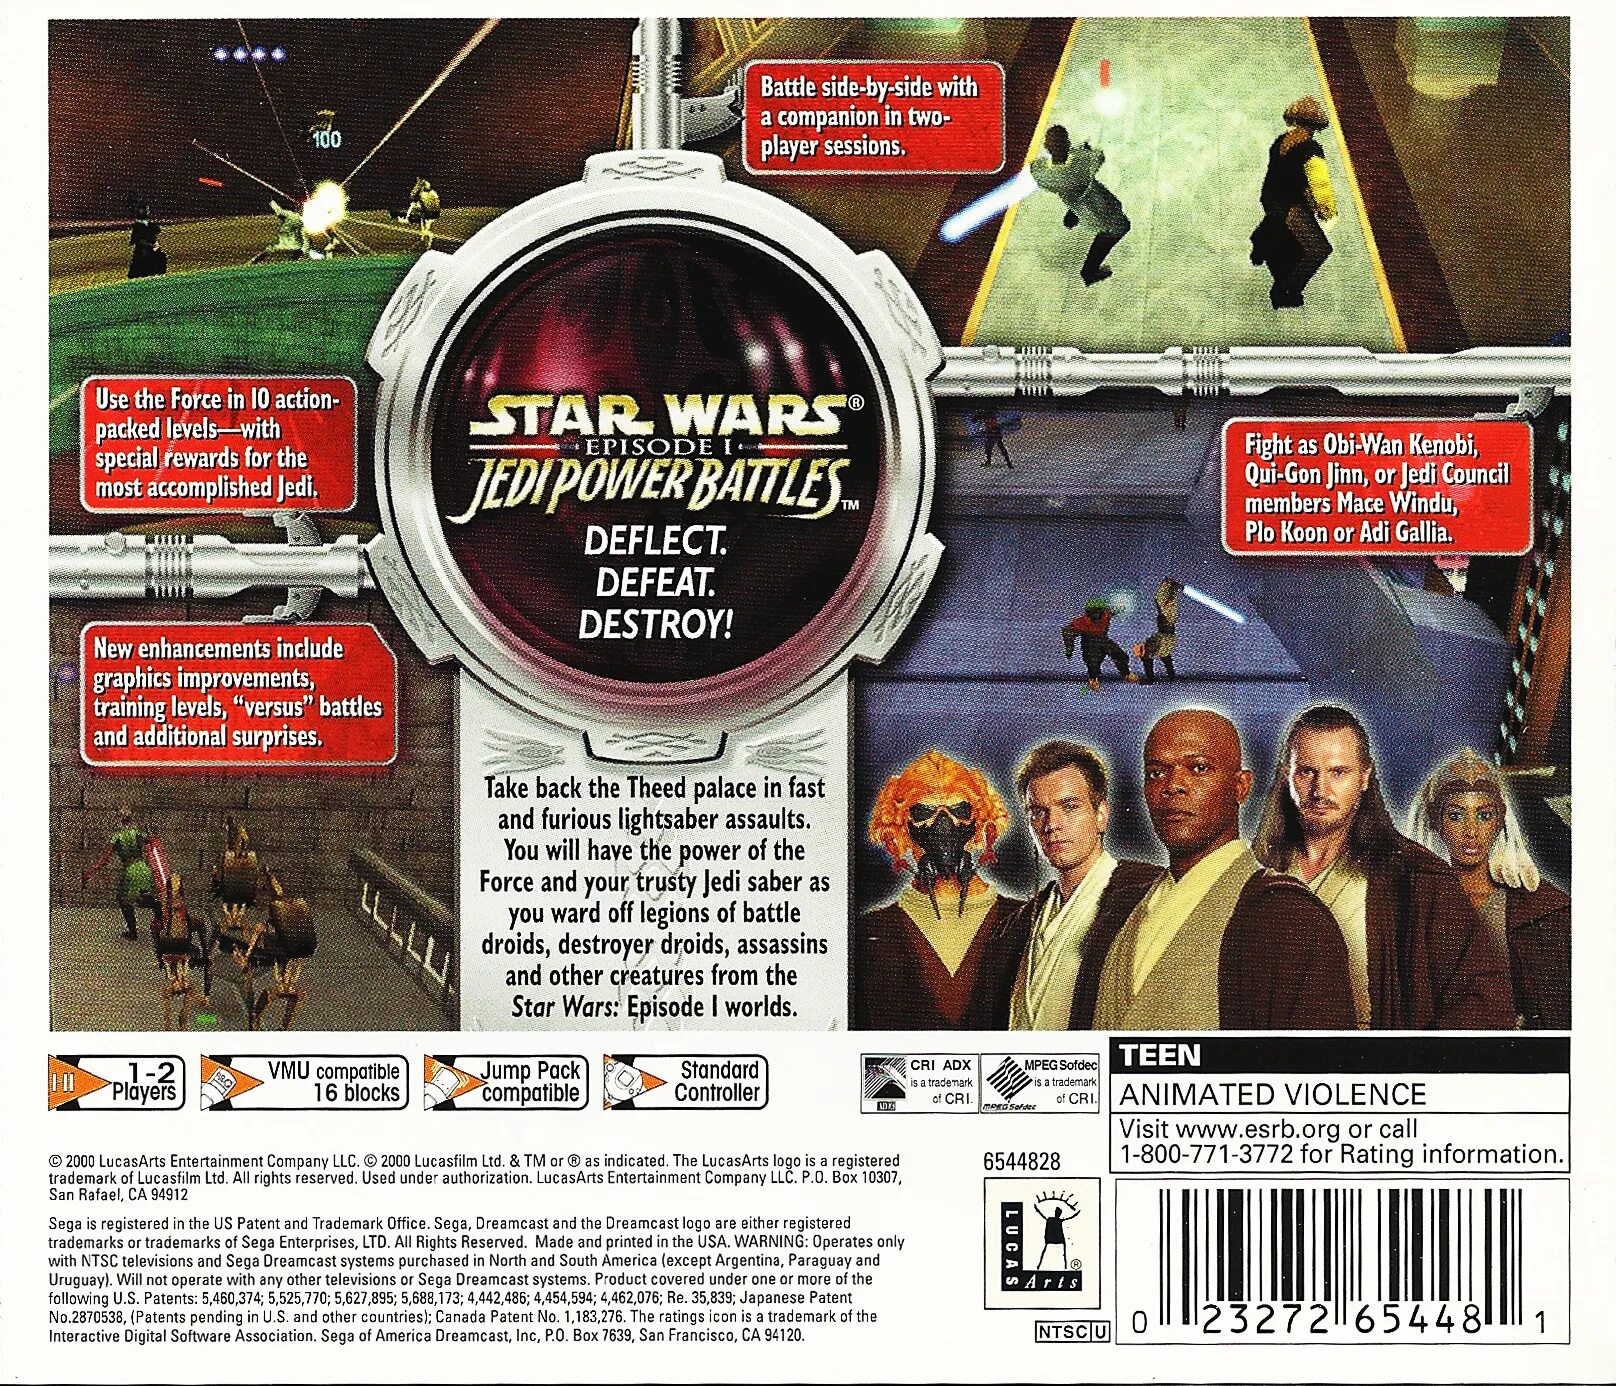 Star wars jedi 1. Star Wars Episode i Jedi Power Battles. Star Wars Episode 1 Jedi Power Battles. Star Wars - Episode i - Jedi Power Battle ps1 обложка. Sega Dreamcast Star Wars Episode 1.